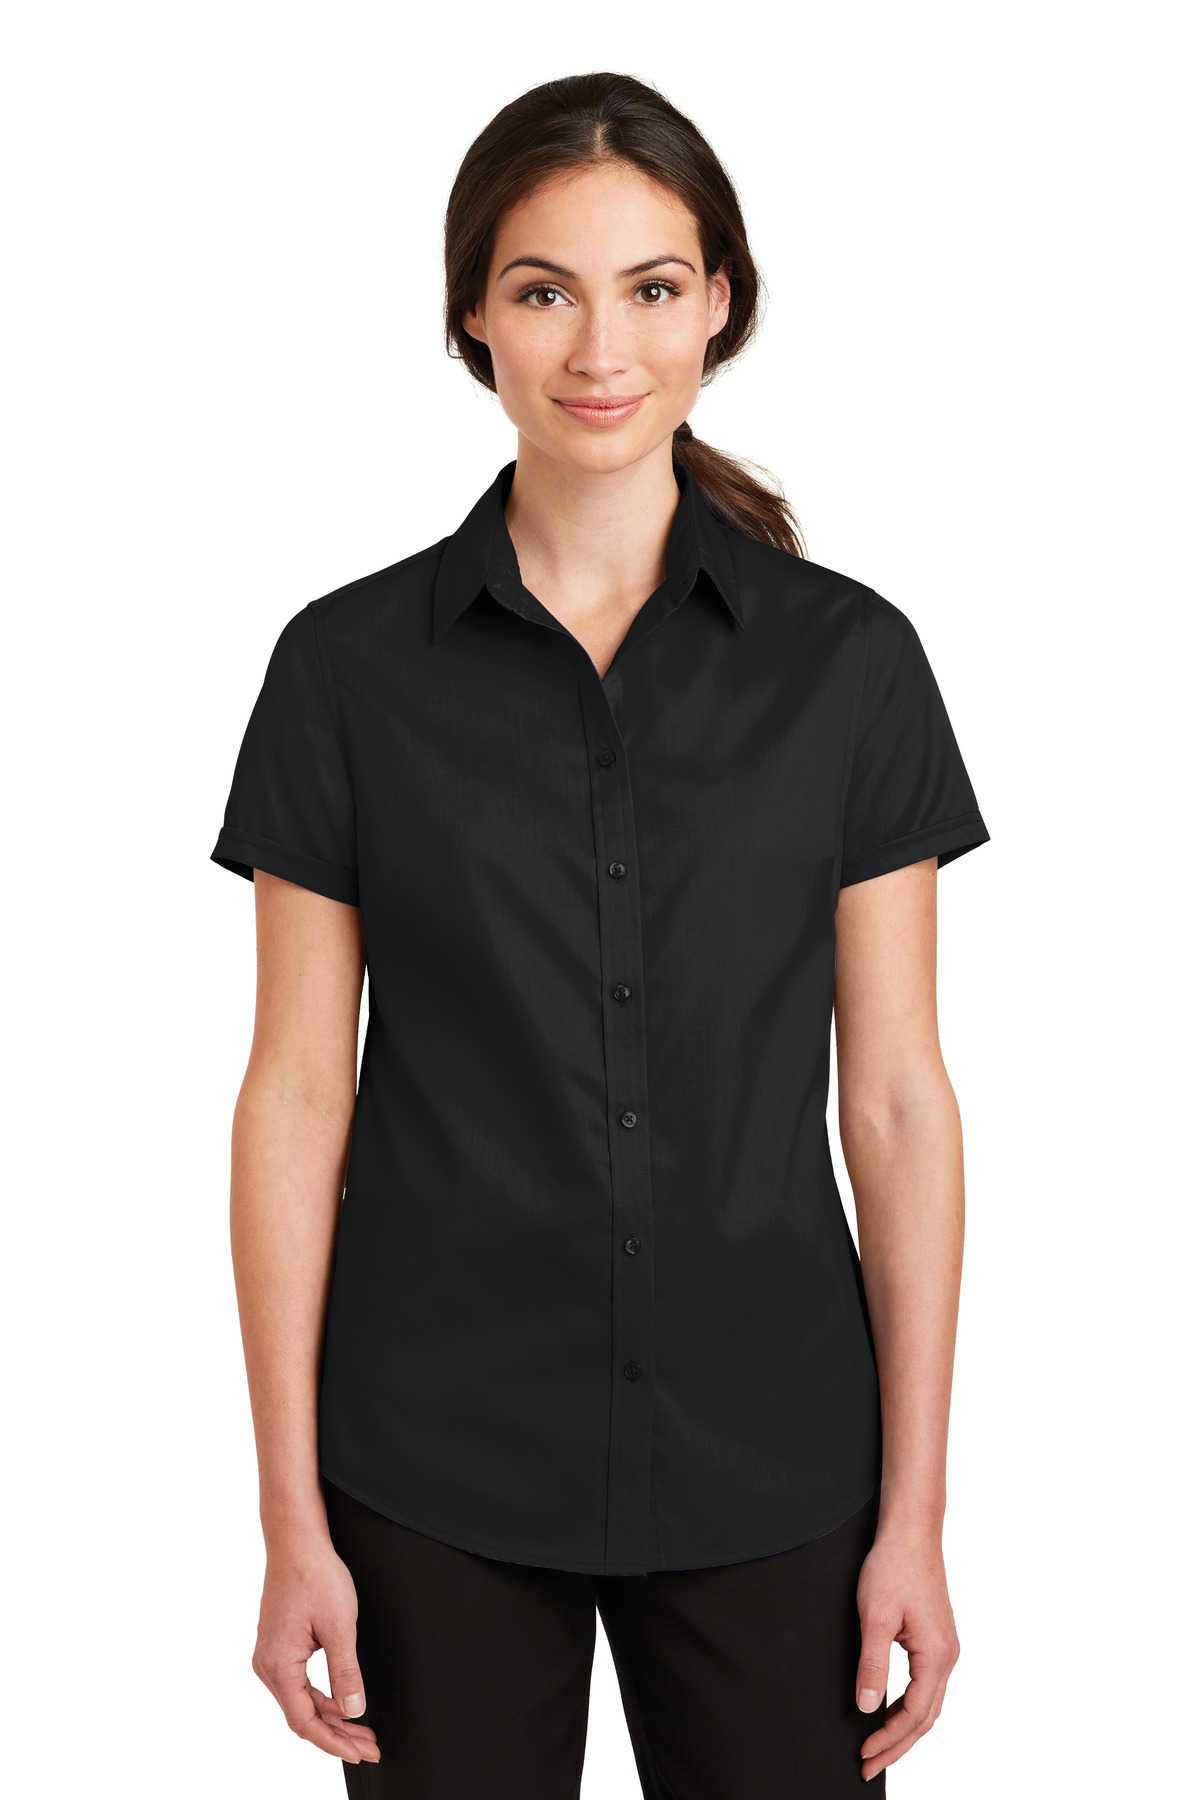 Port Authority Ladies Woven Shirts for Hospitality- ® Ladies Short Sleeve SuperPro Twill Shirt.-Port Authority